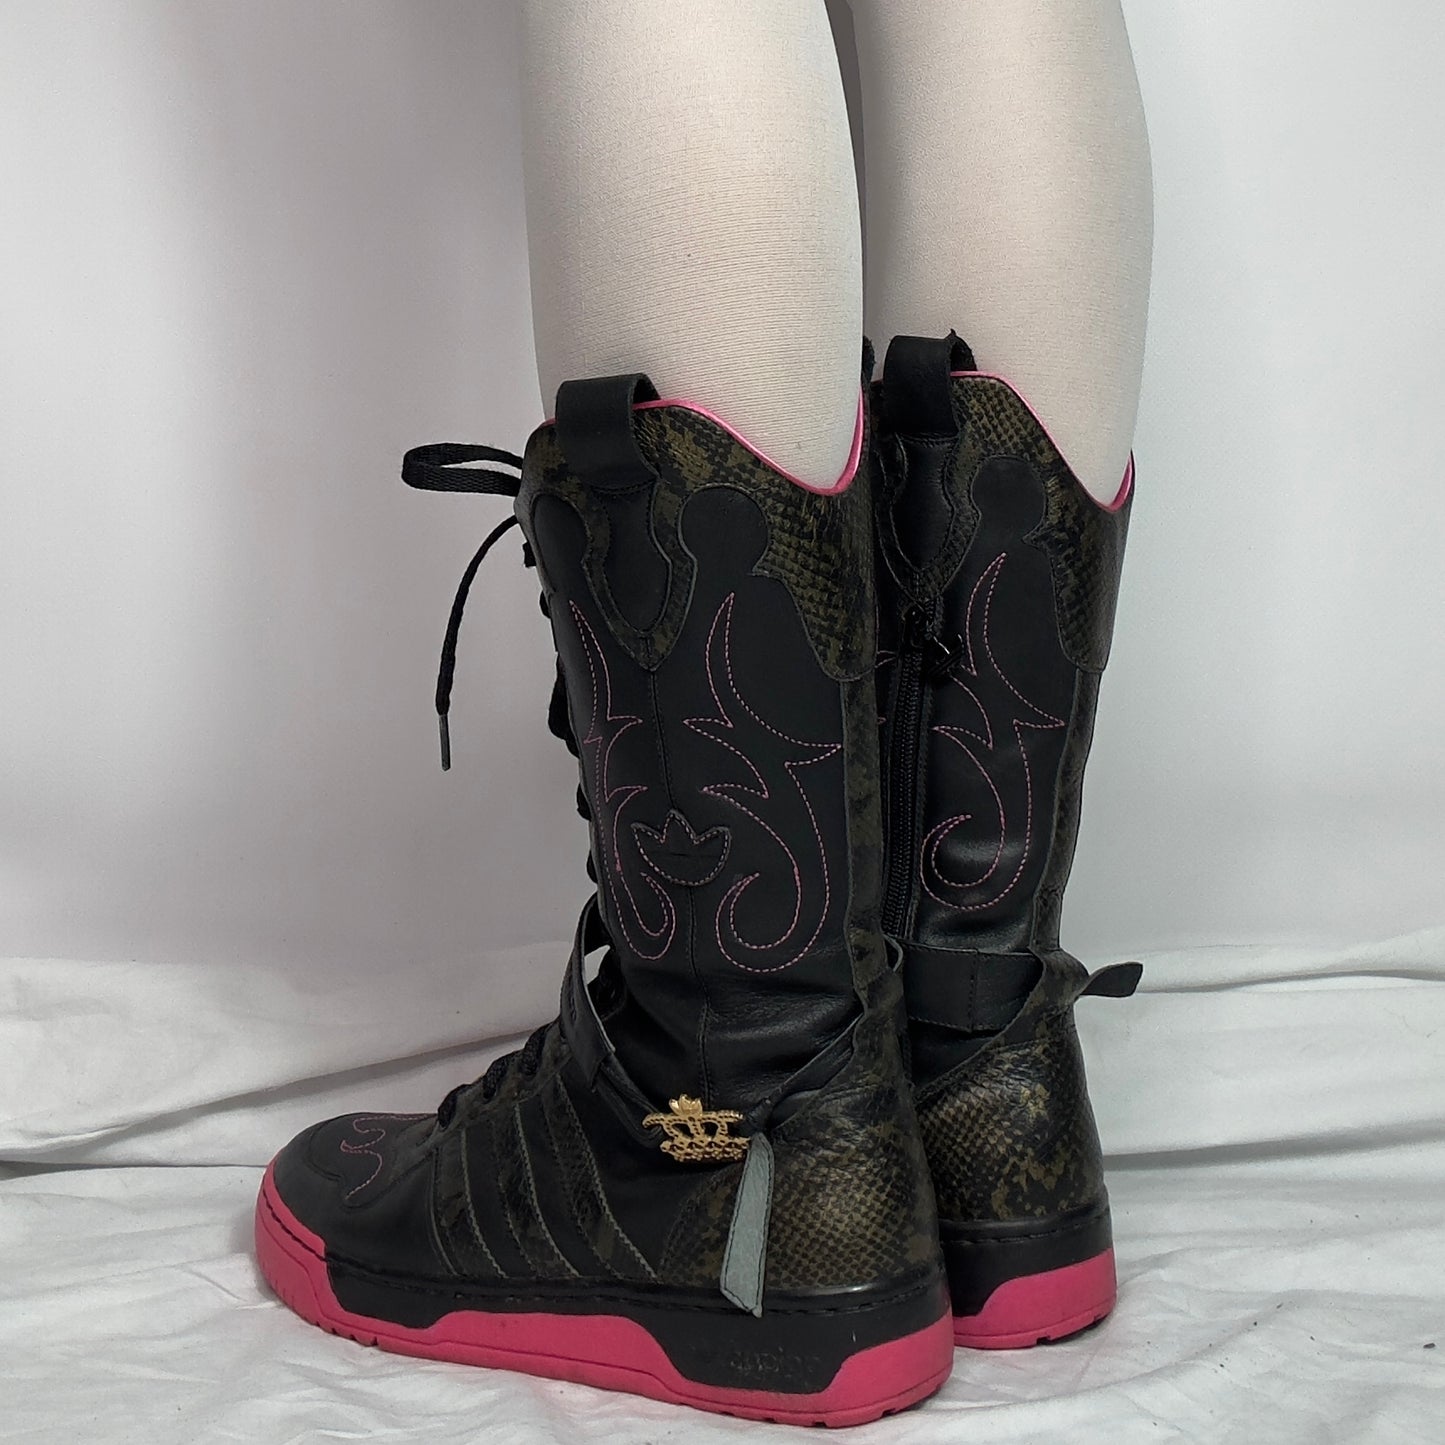 Adidas Missy Elliot Rare Cowboy Boxing Boots - Respect Me 37/38.5